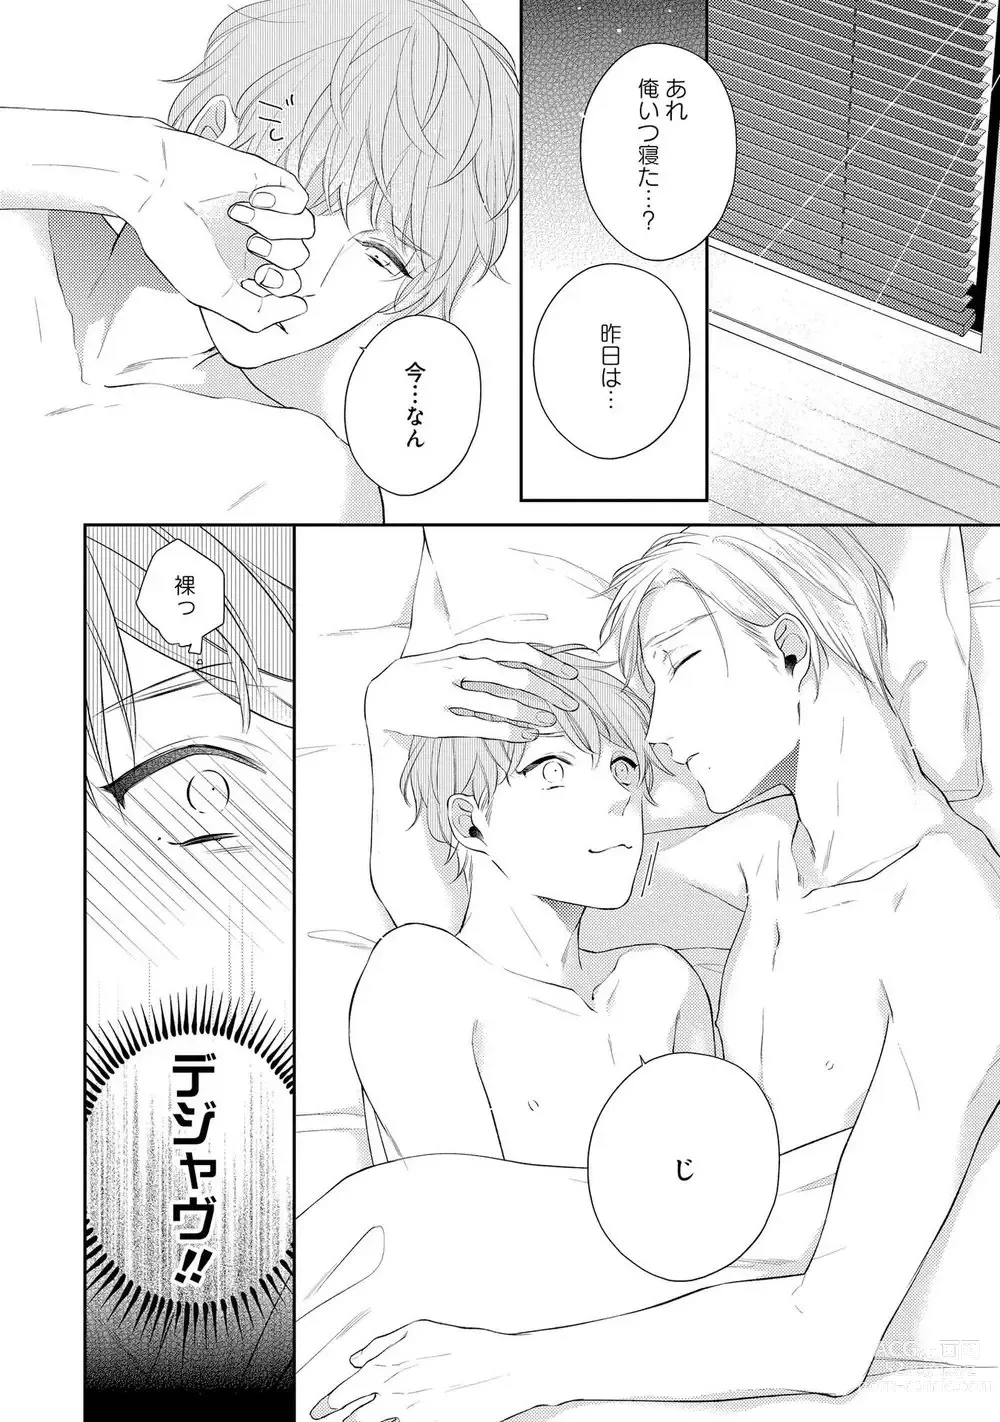 Page 156 of manga NIGHT MILK HEAVEN